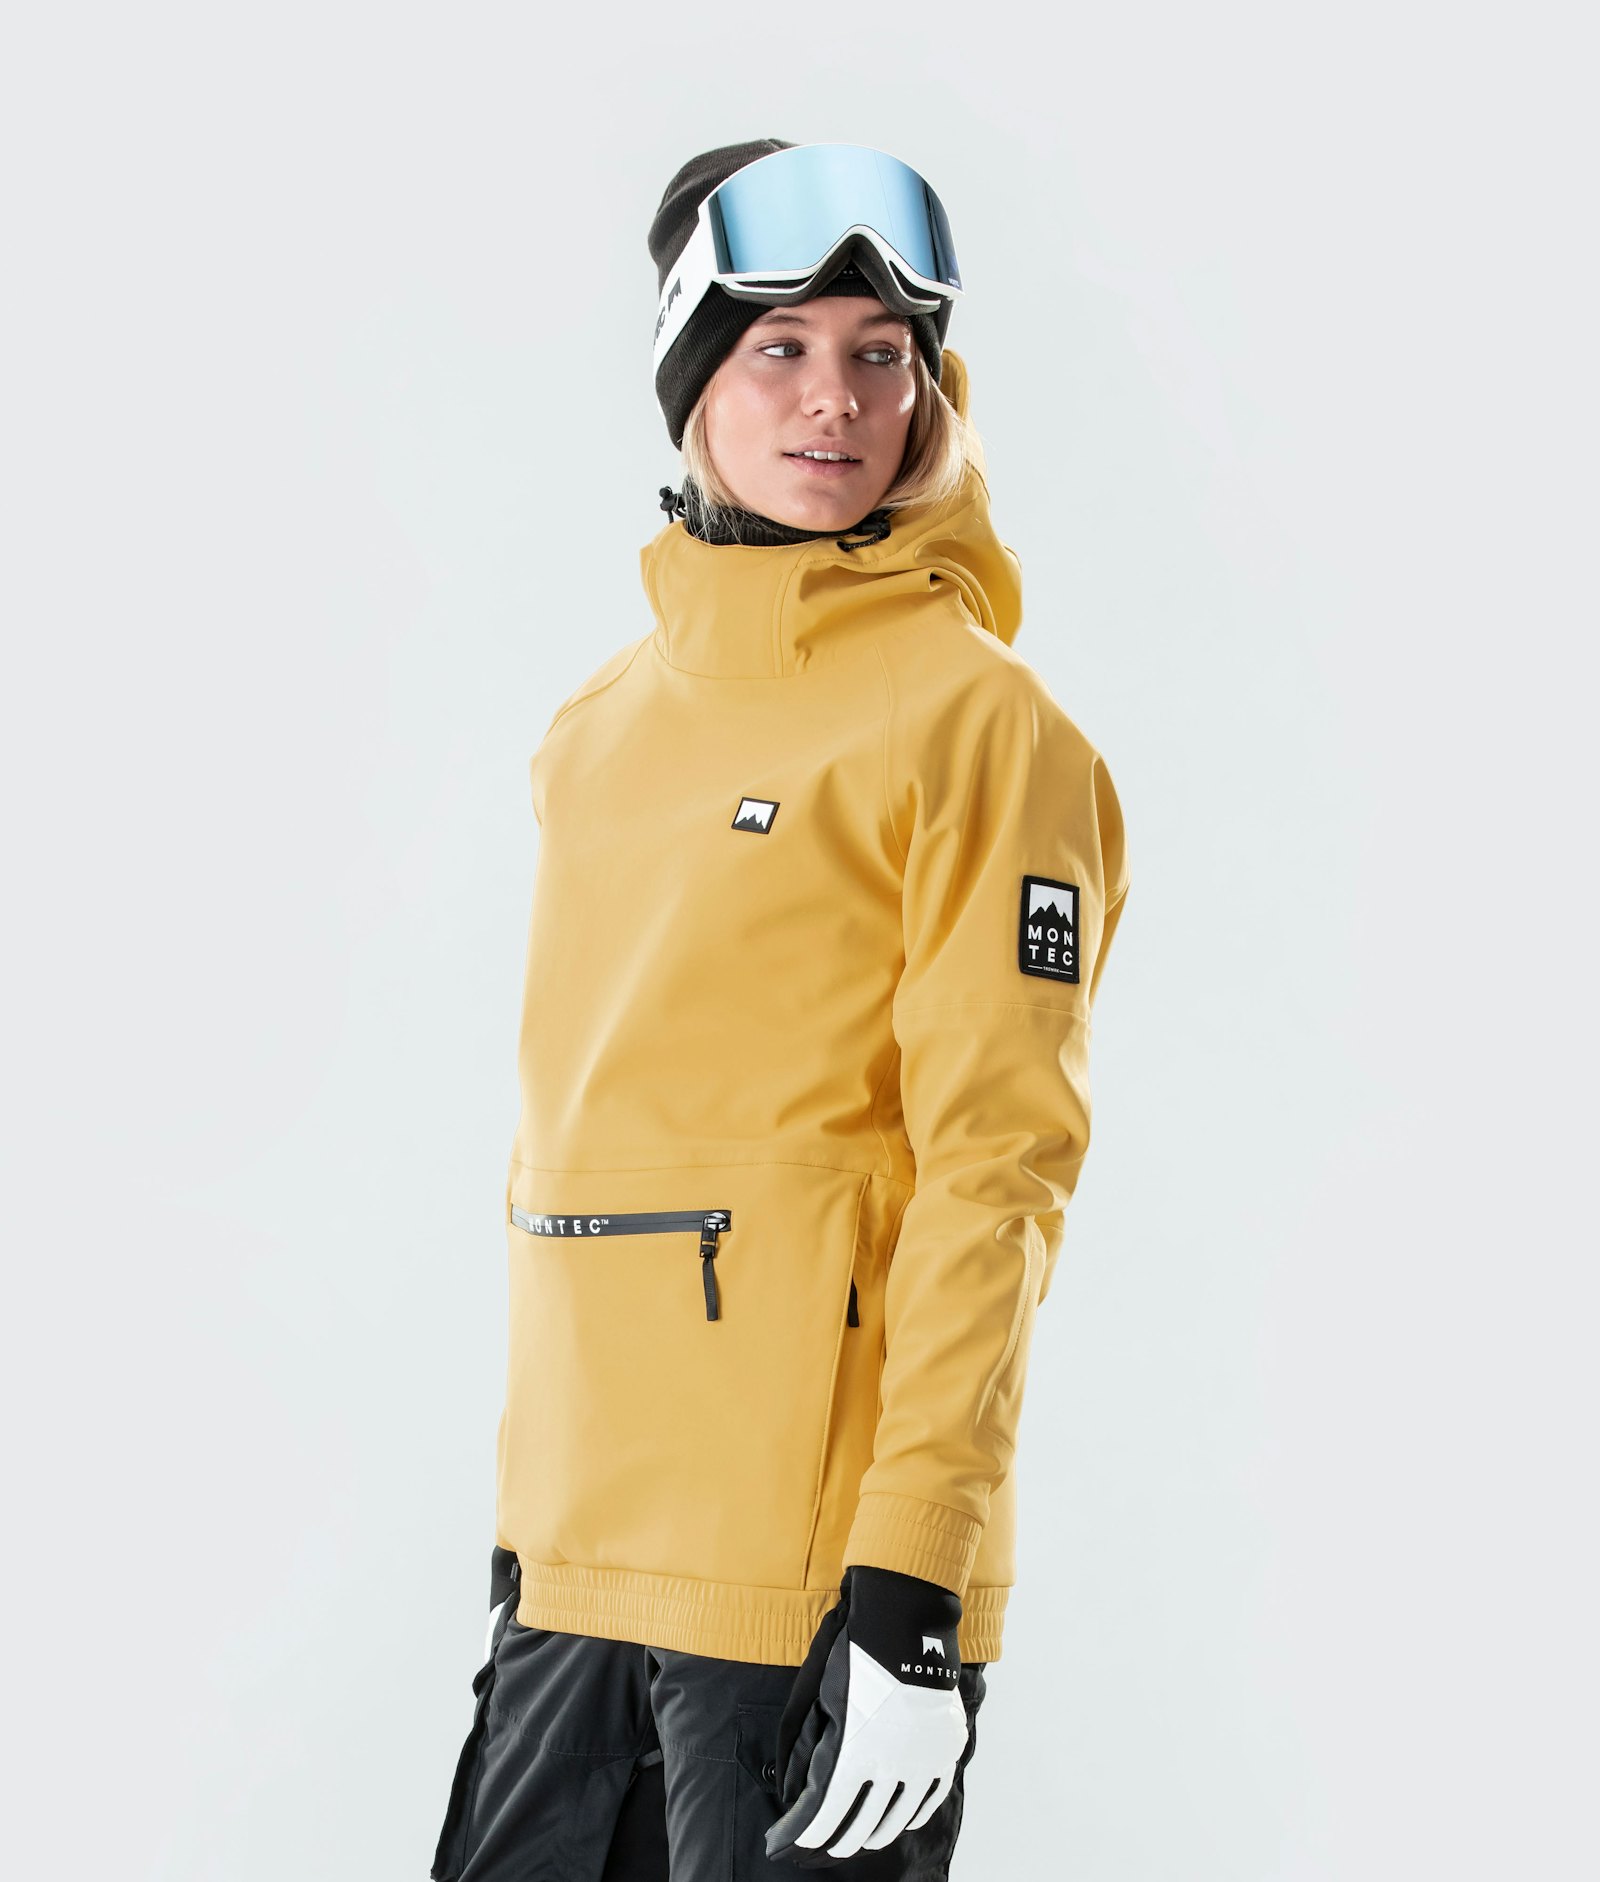 Tempest W 2020 Snowboard Jacket Women Yellow Renewed, Image 4 of 9